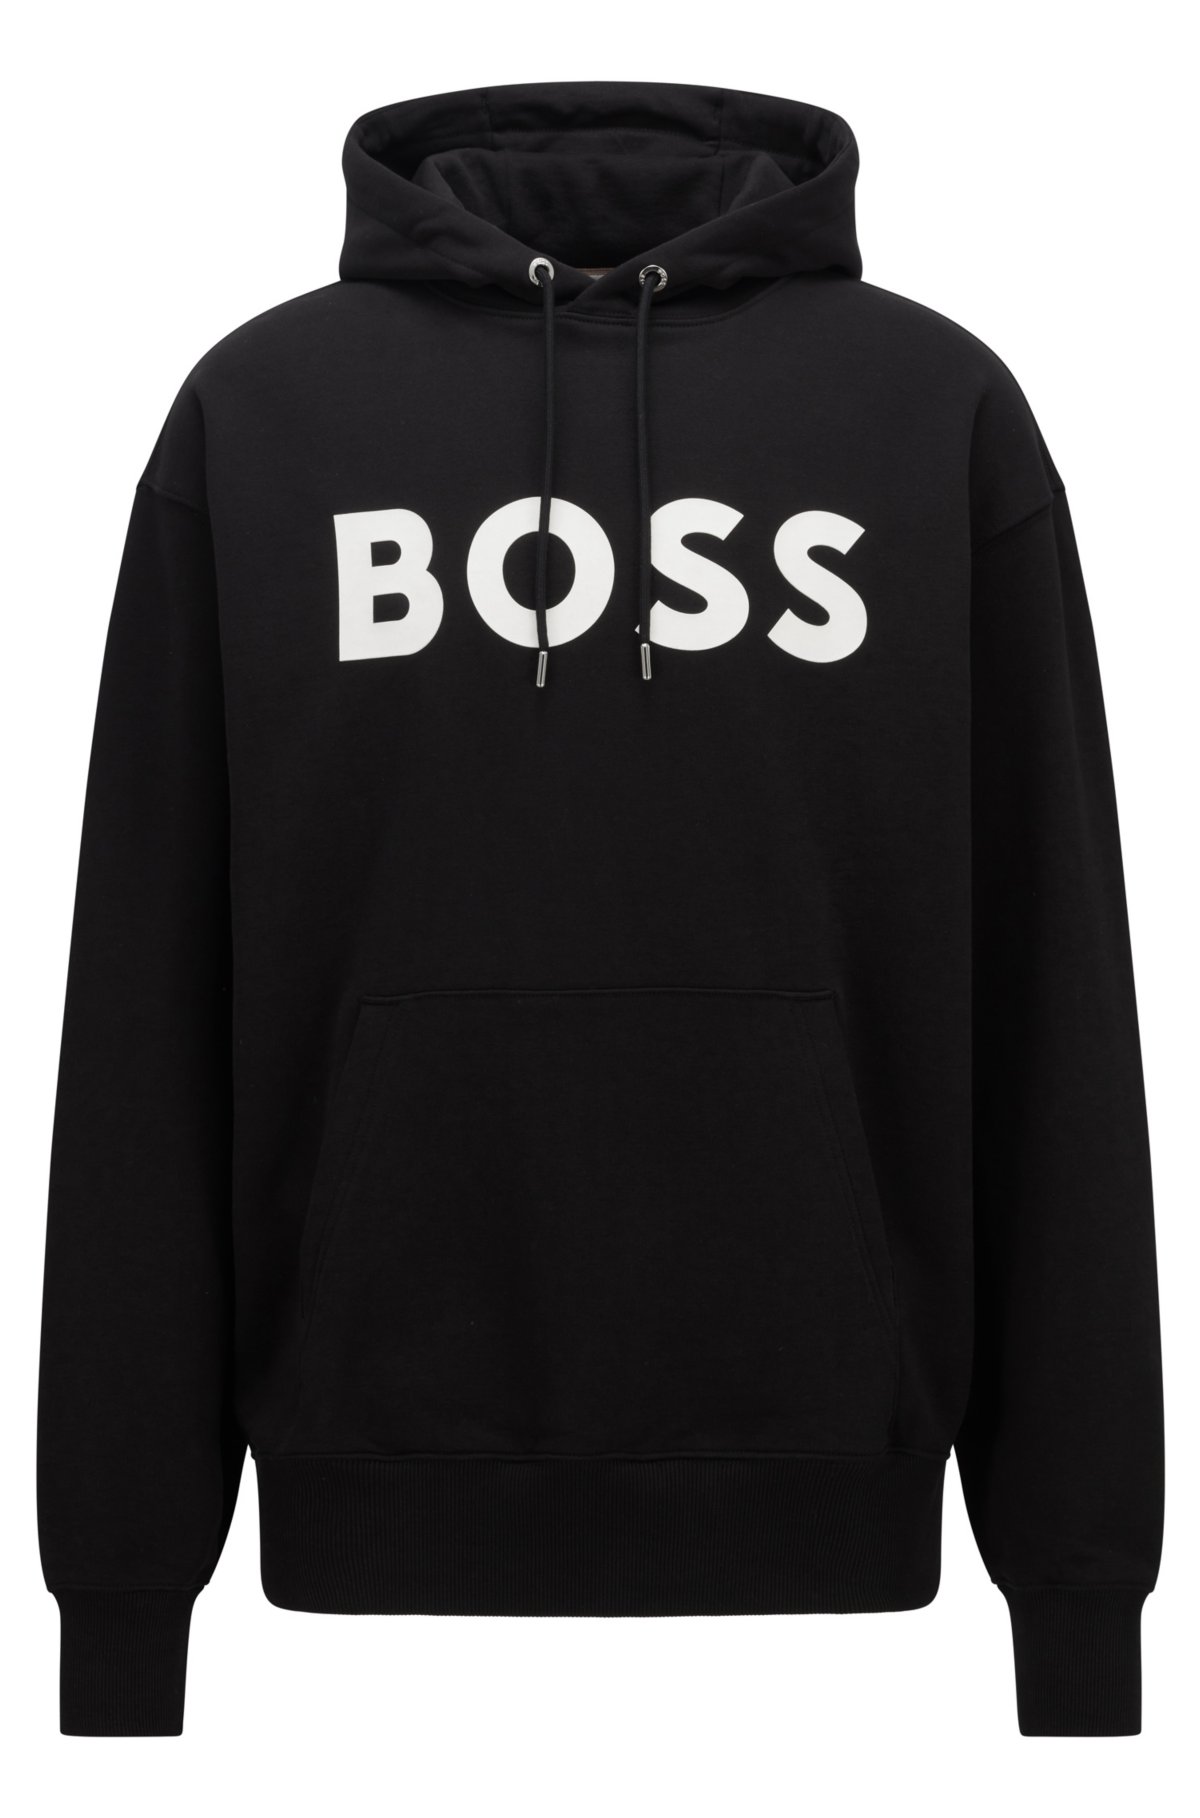 Cotton hooded sweatshirt with contrast logo, Black